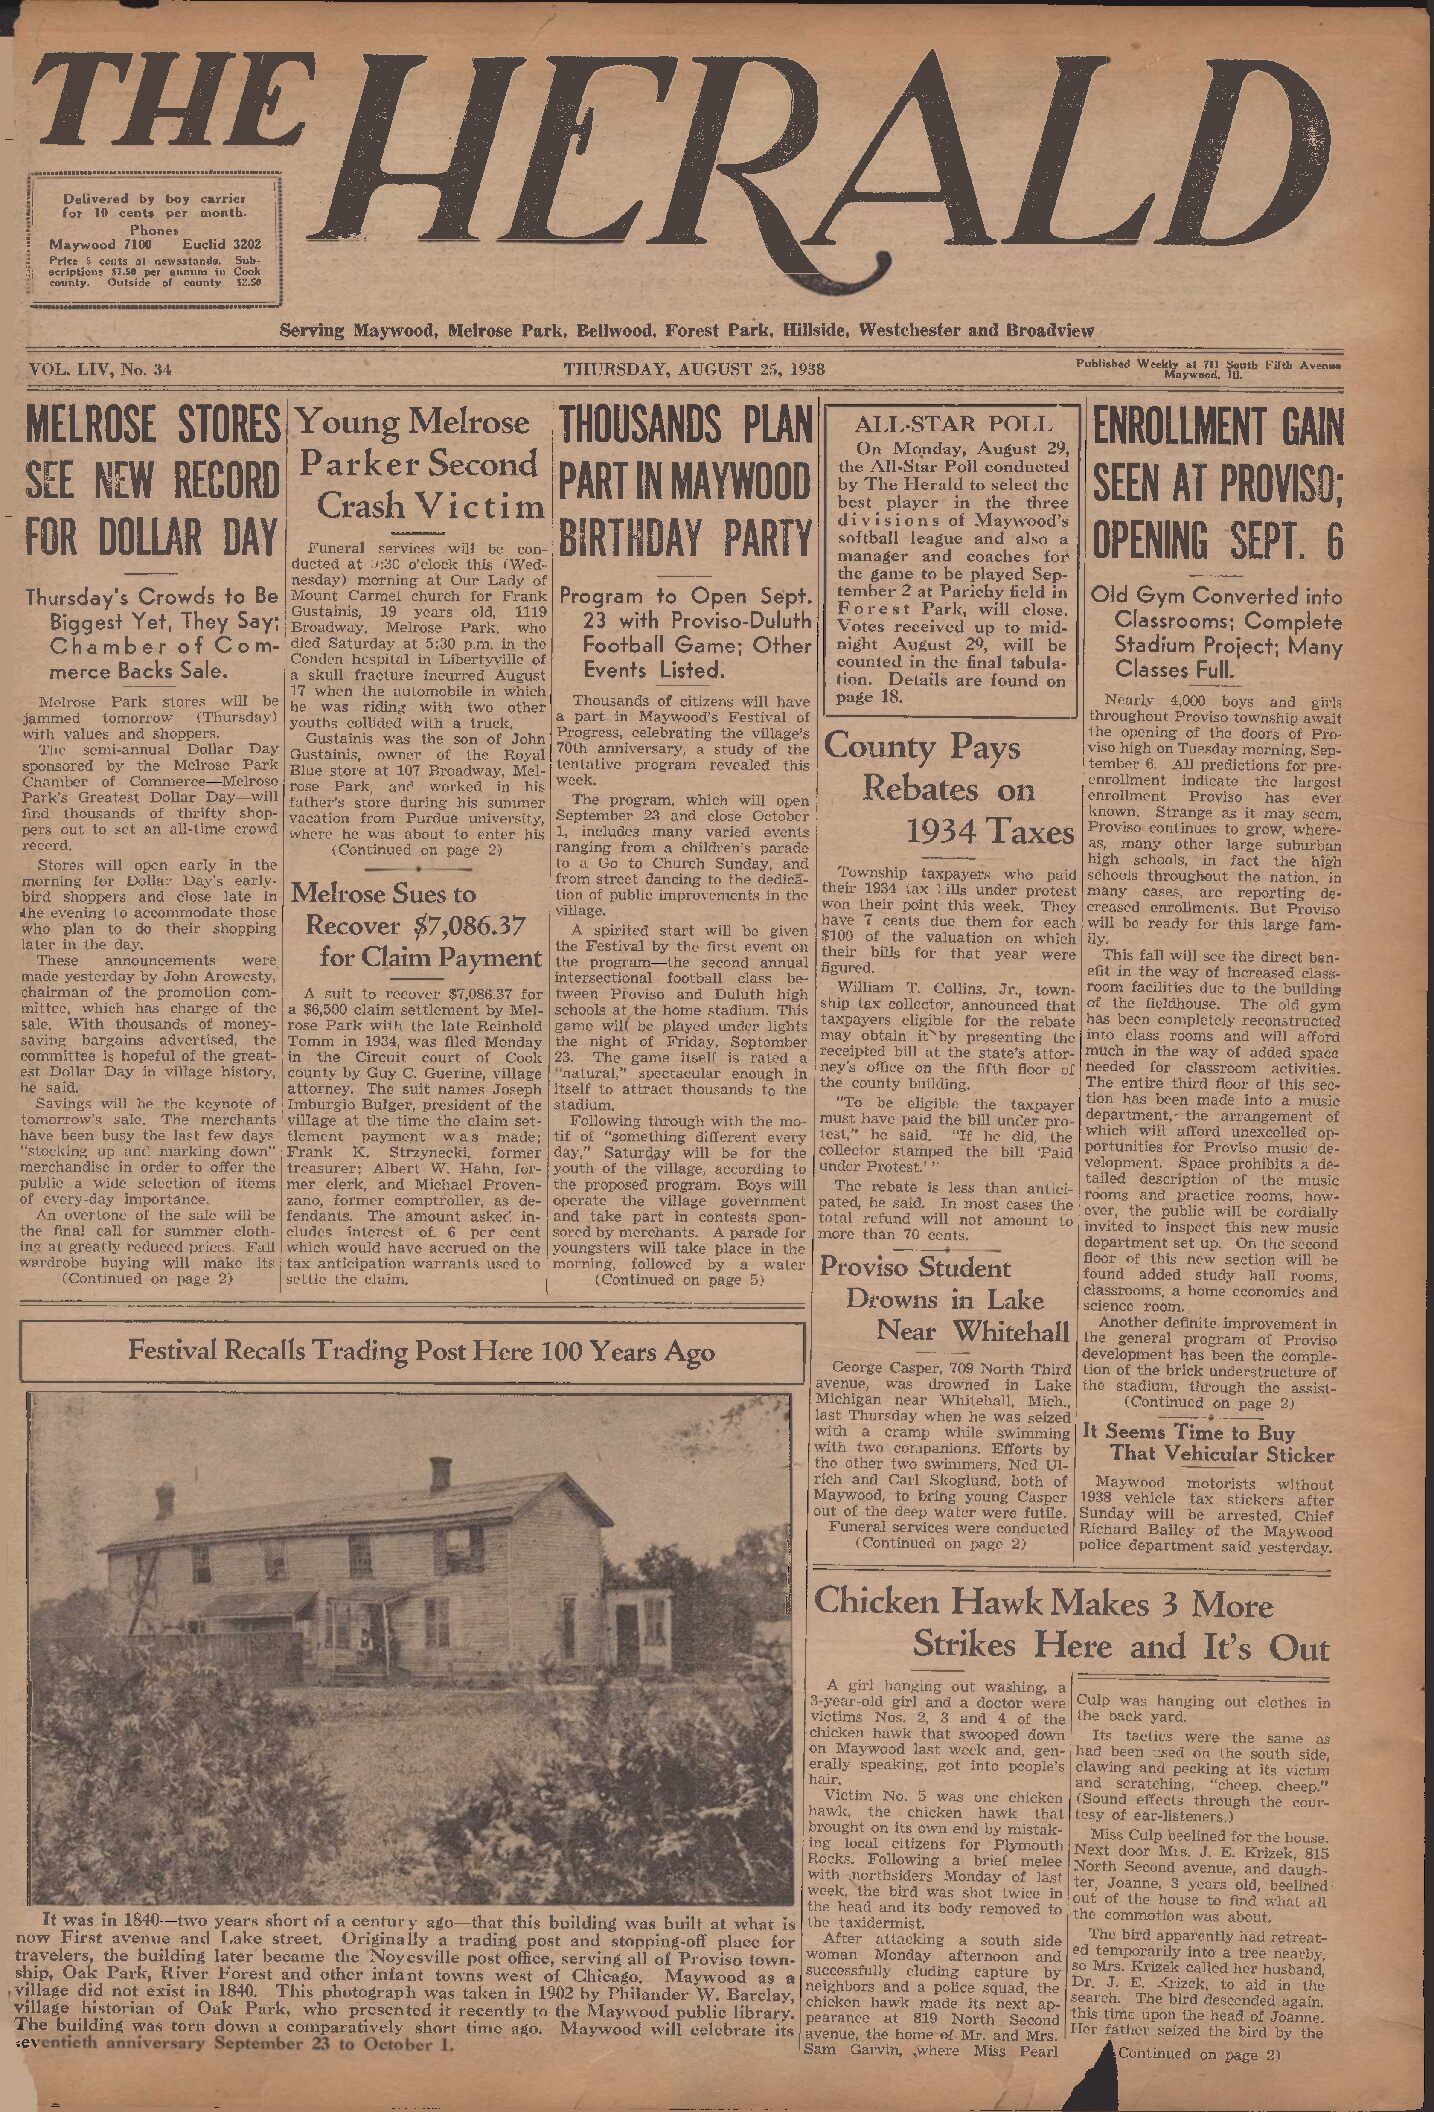 The Herald – 19380825